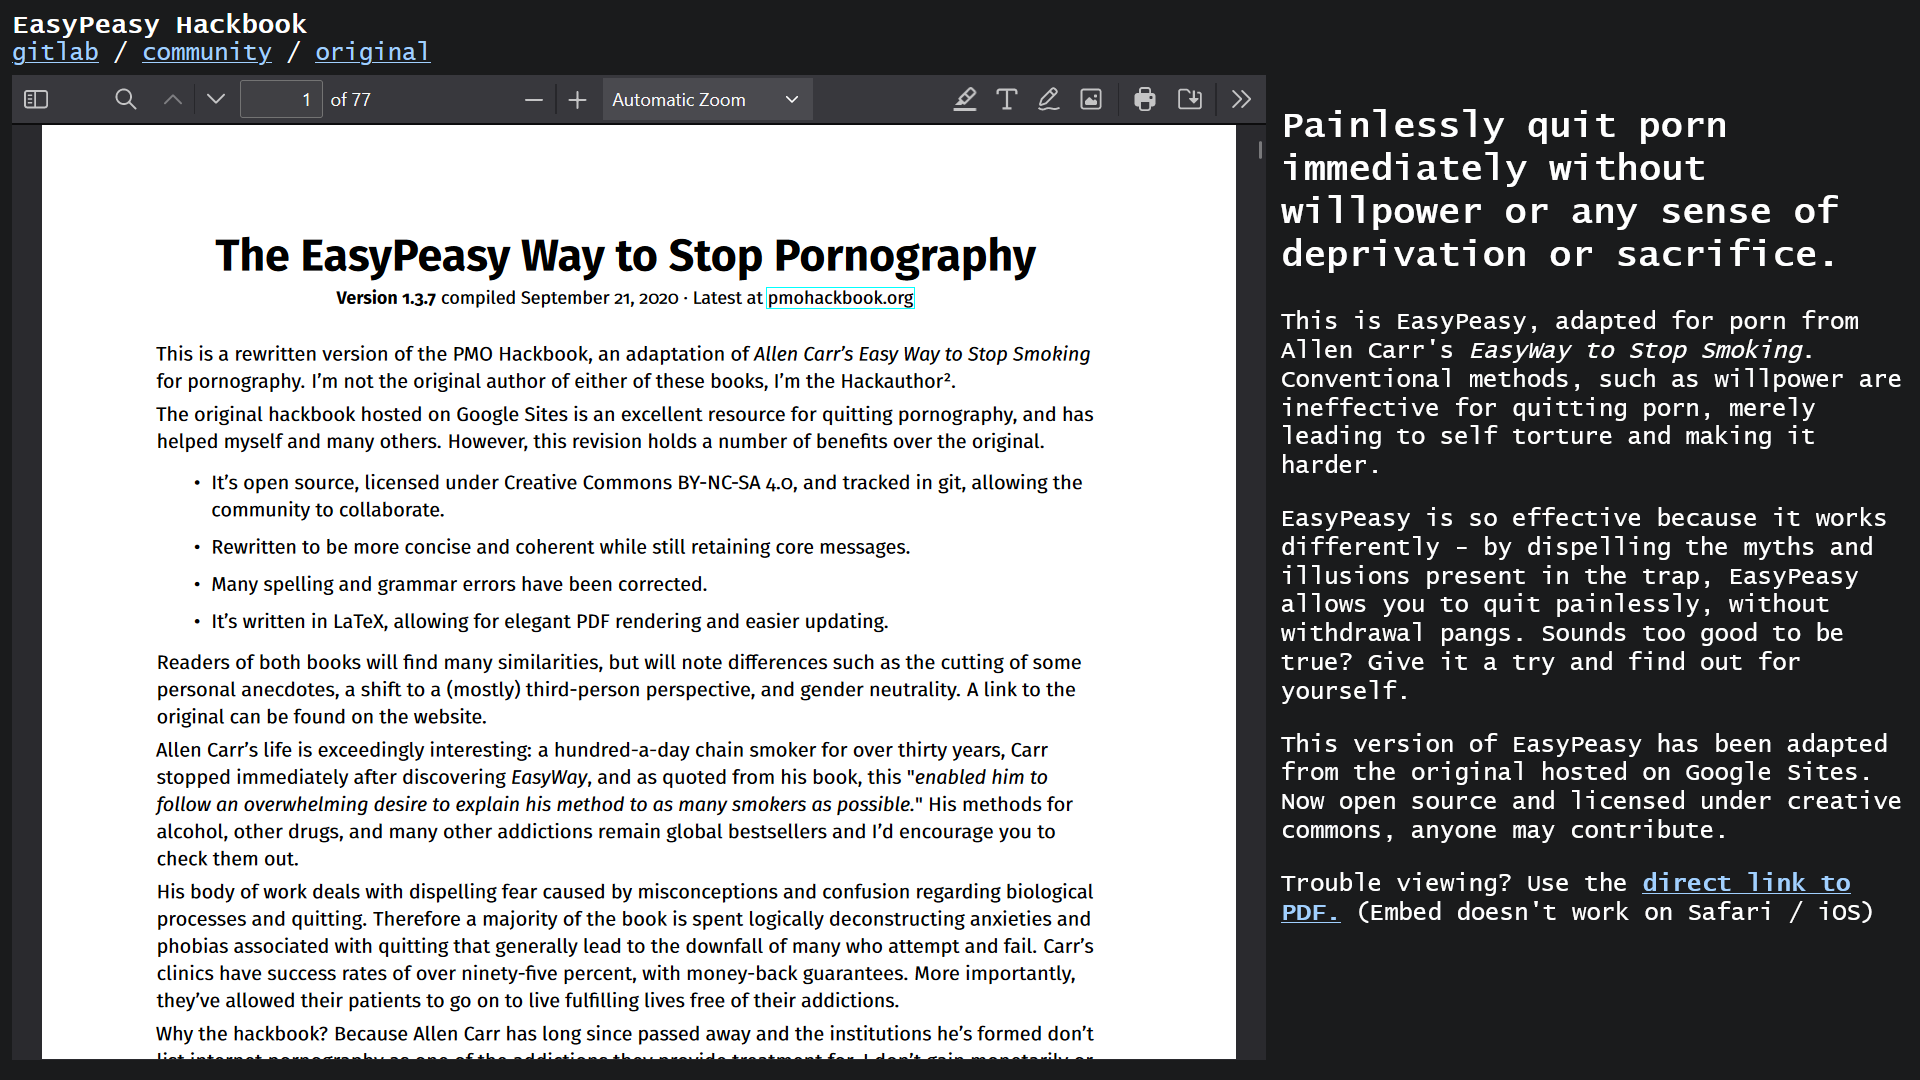 First version of Easypeasy Hackbook